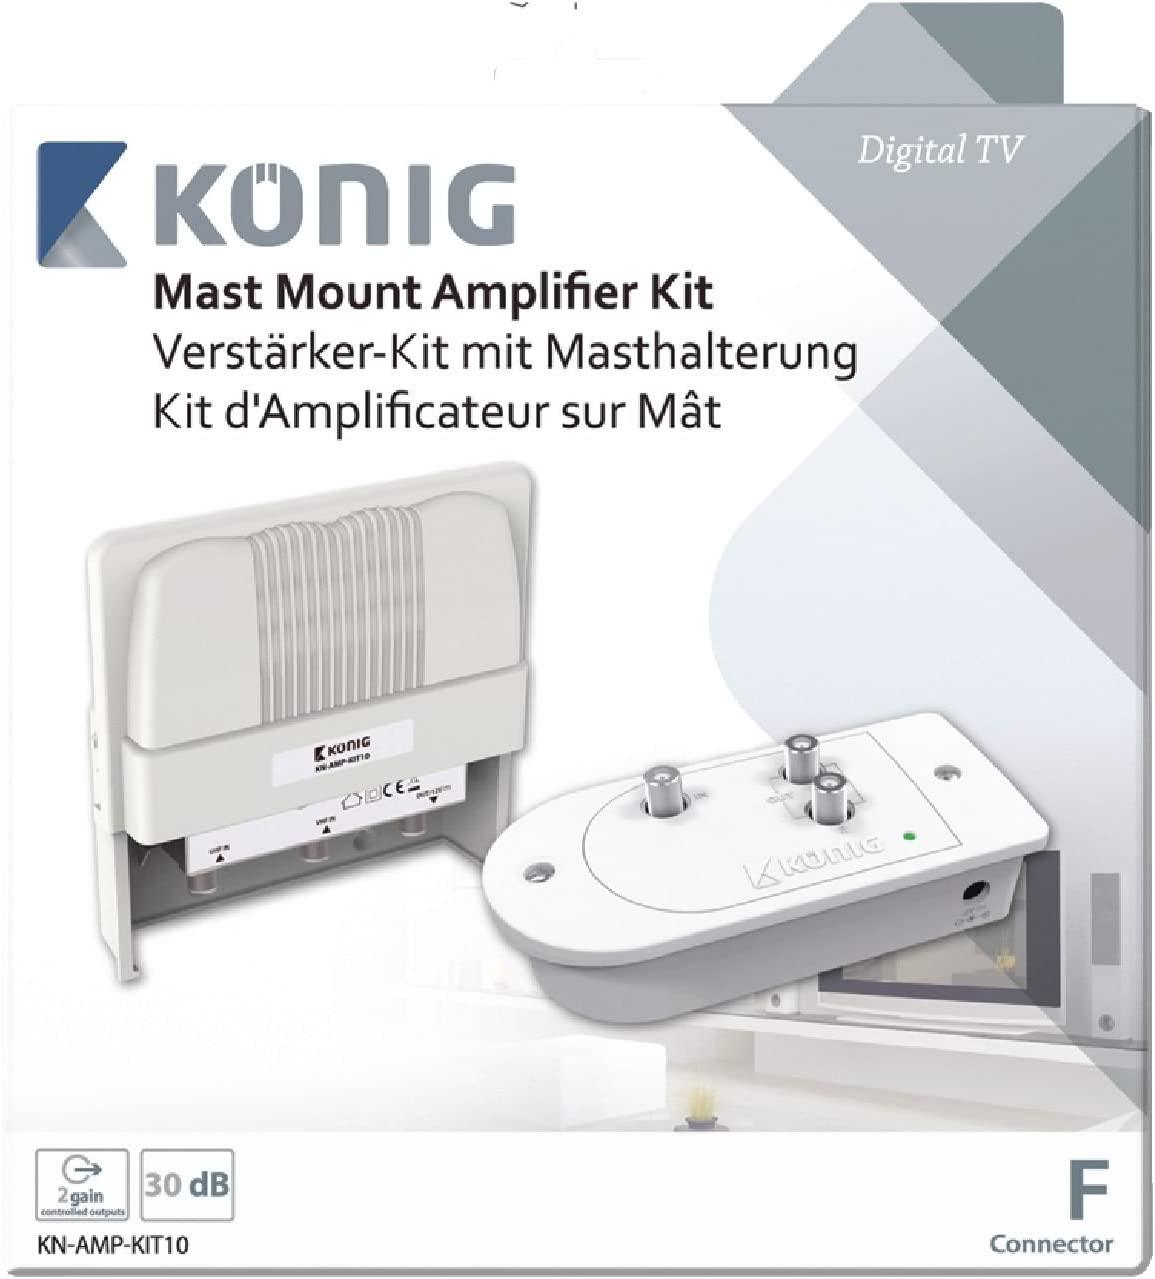 König Amplifier Kit with Mast Mount for UHF/VHF Antenna - GameStore.mt | Powered by Flutisat